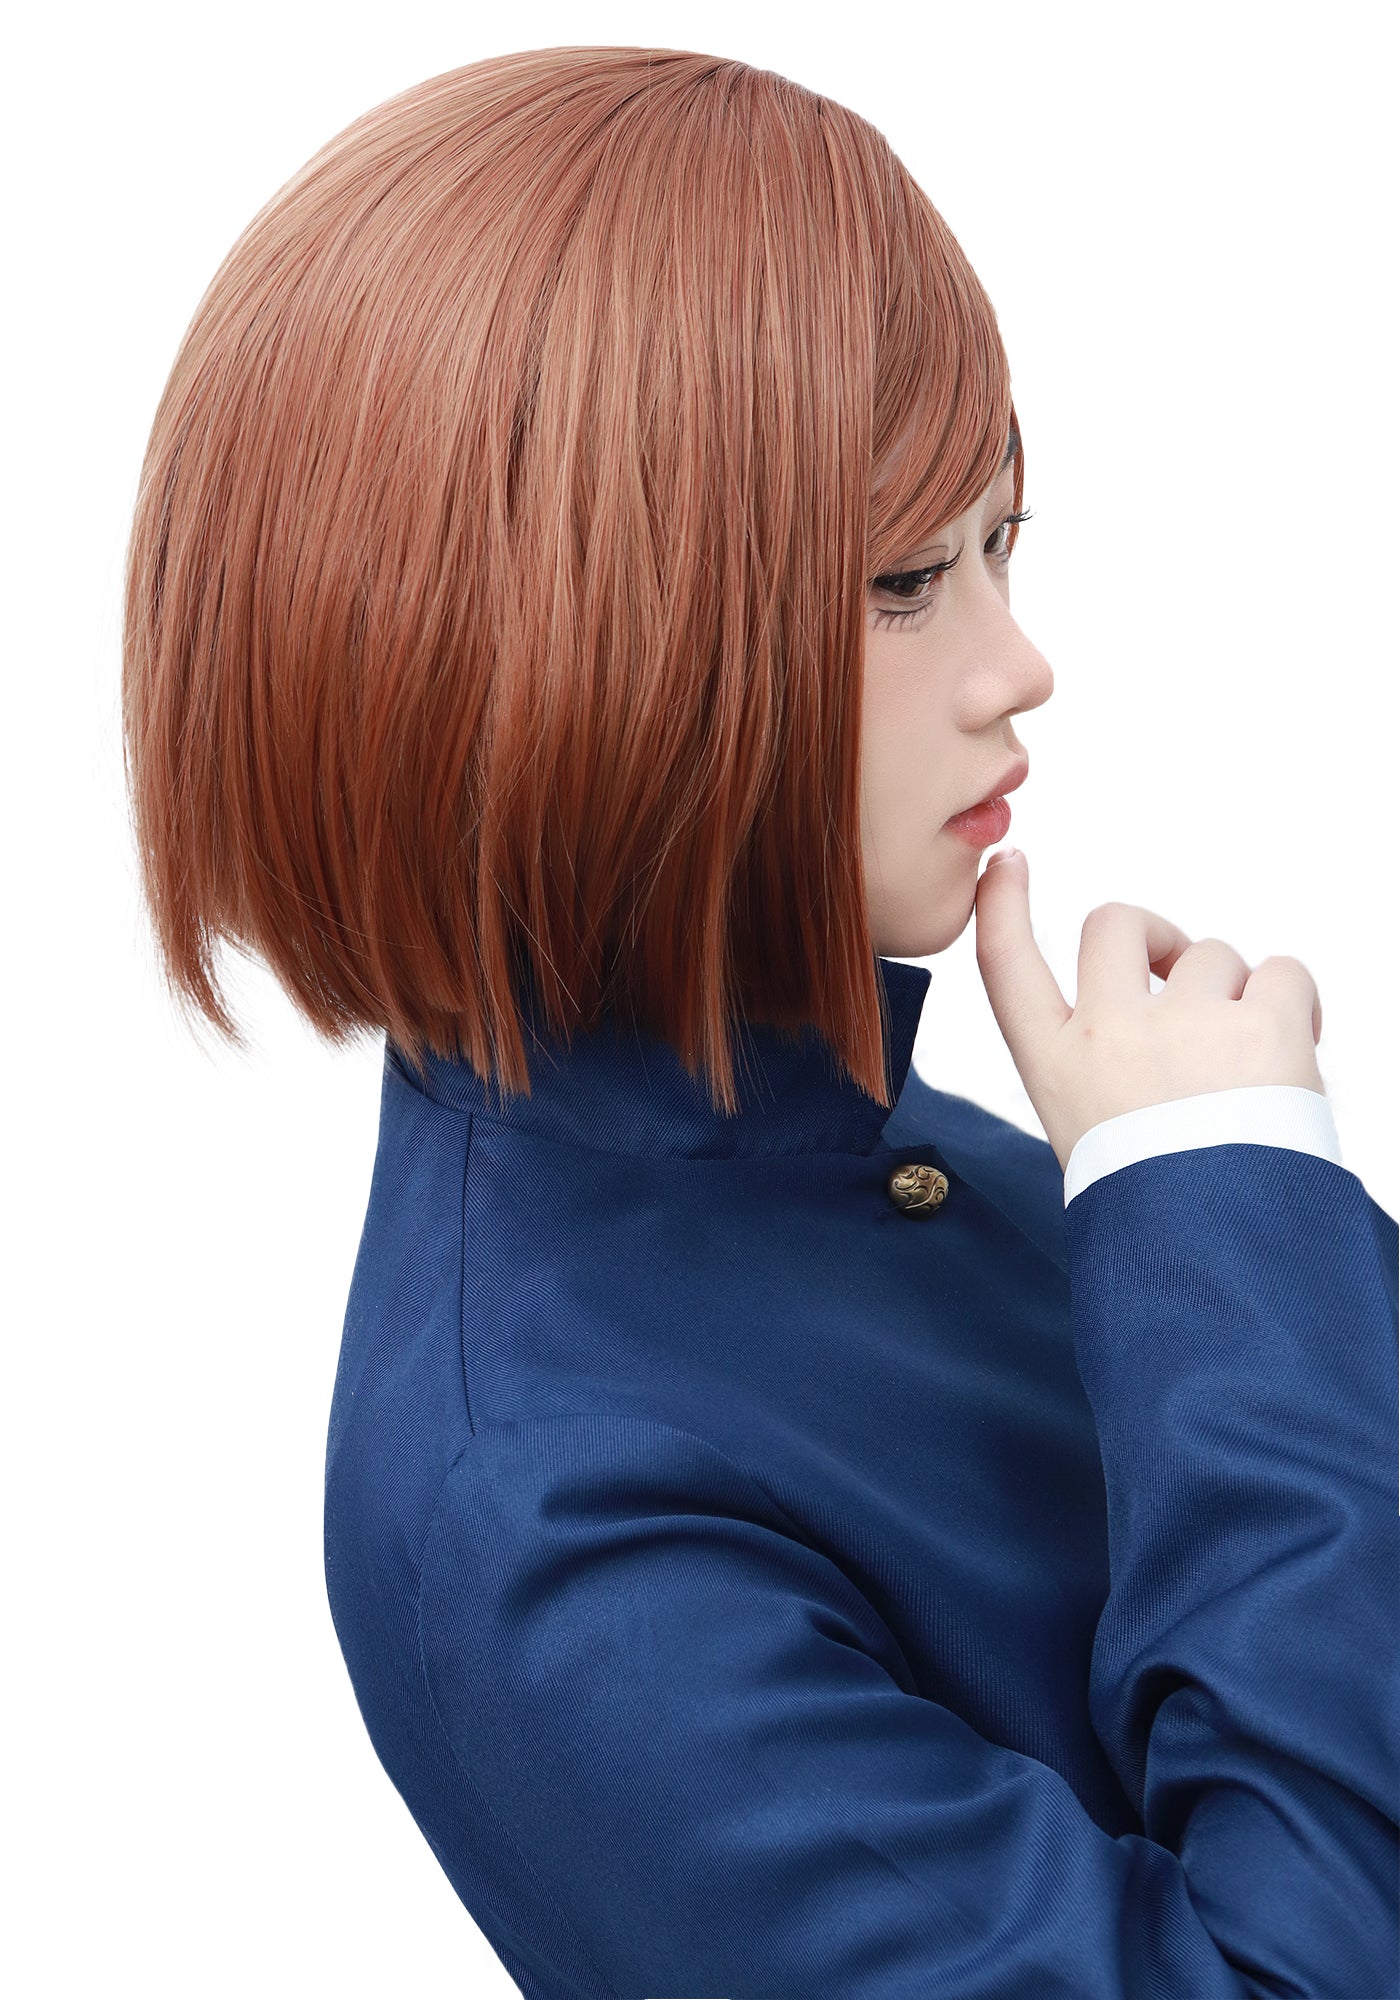 Kugisaki Nobara Cosplay Wig with Stickers for Anime Costume